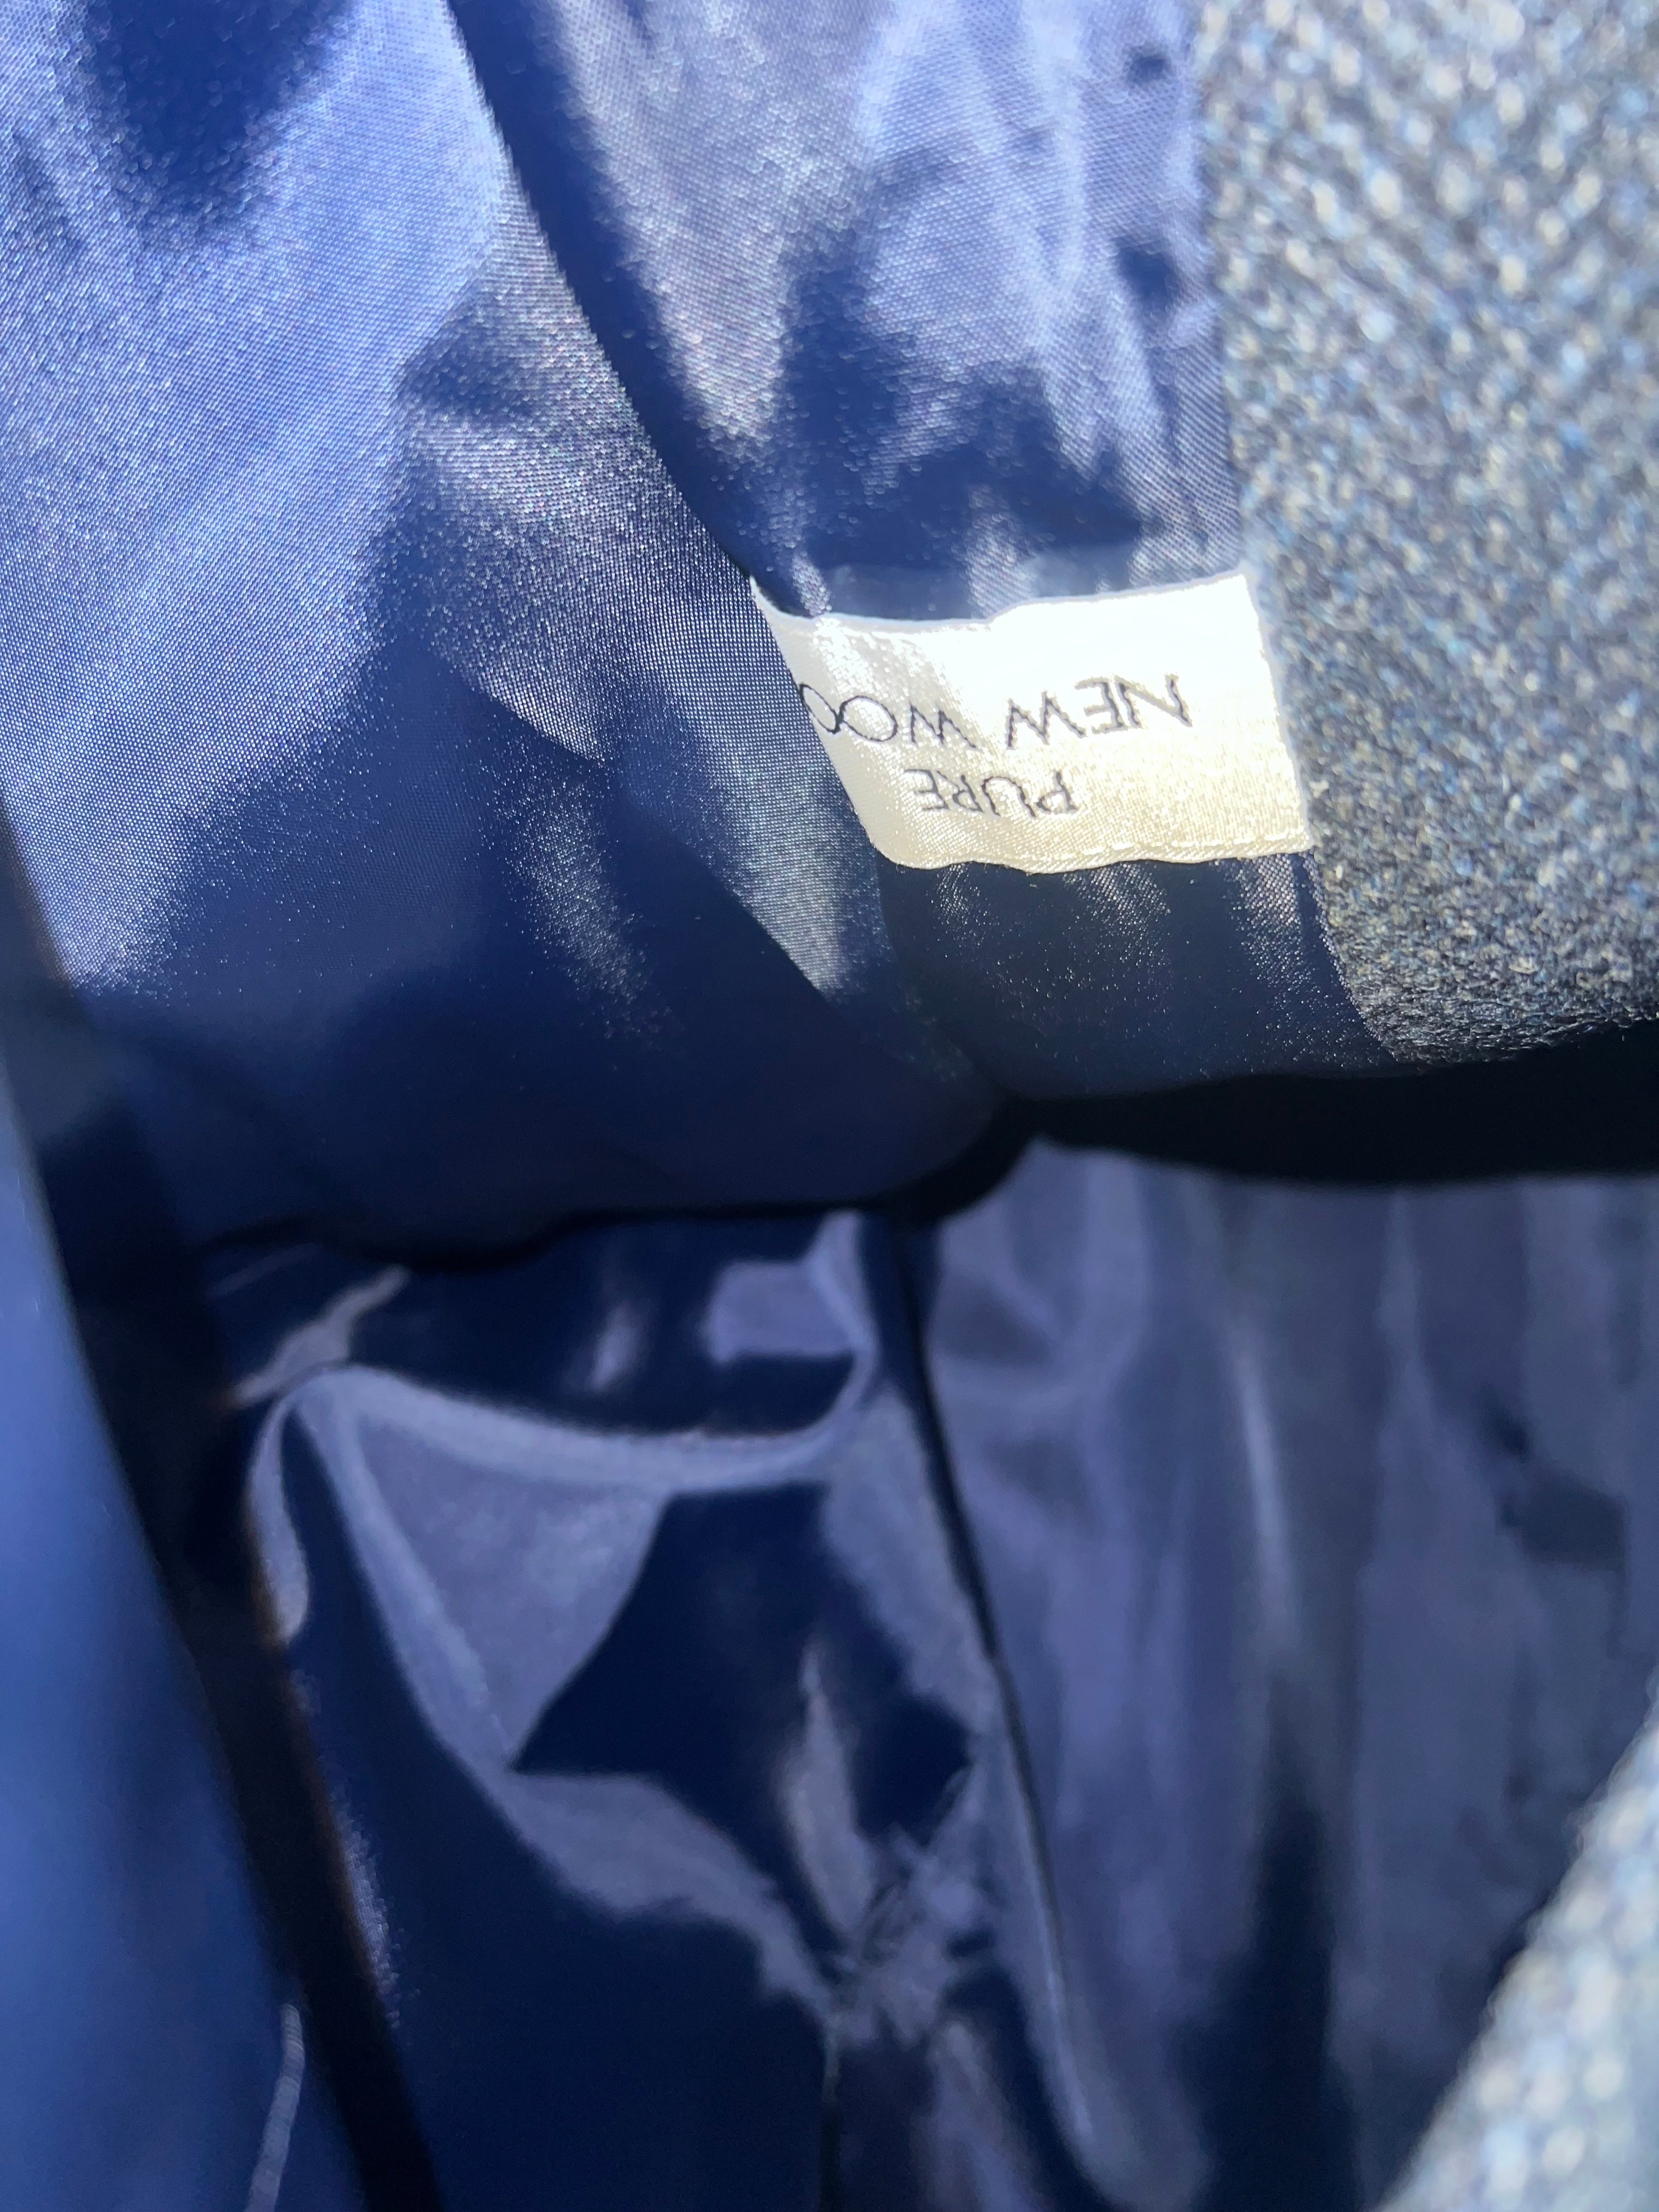 Caldene Silverdale 44” Blue Tweed Hacking Jacket